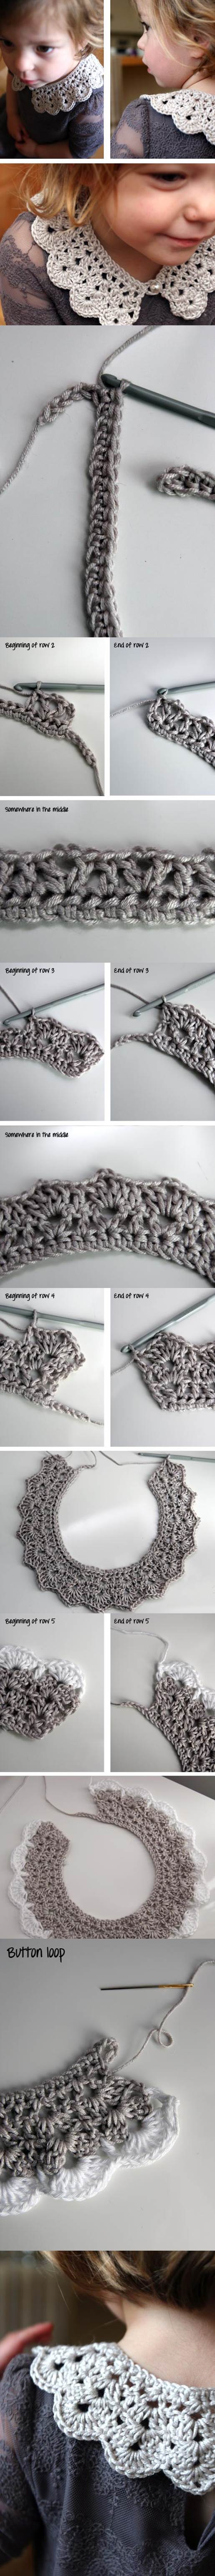 DIY Pretty Crochet Collar 2